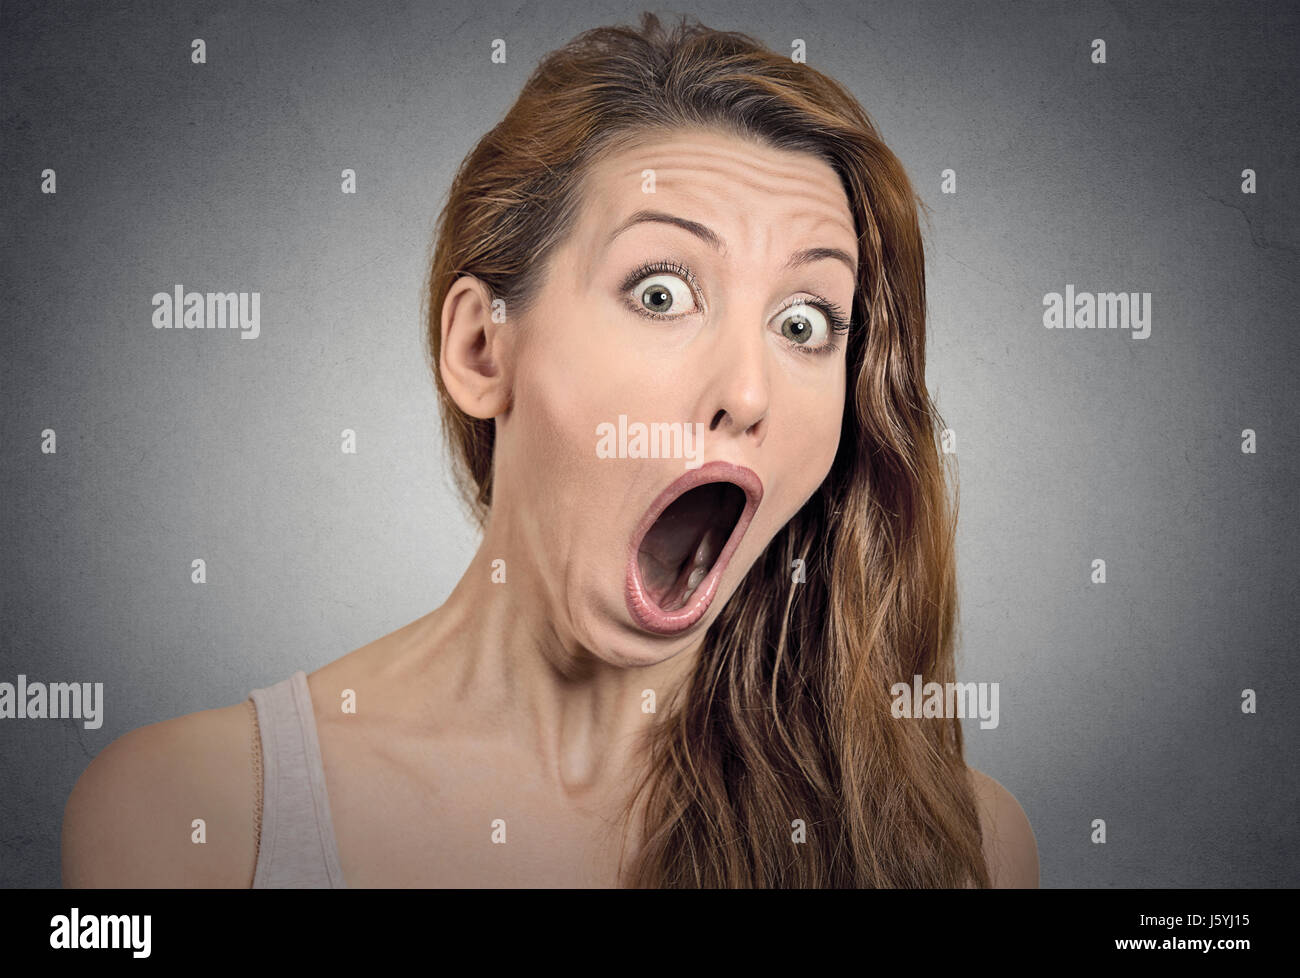 Surprise Astonished Woman Closeup Portrait Woman Looking Surprised In Full Disbelief Wide Open